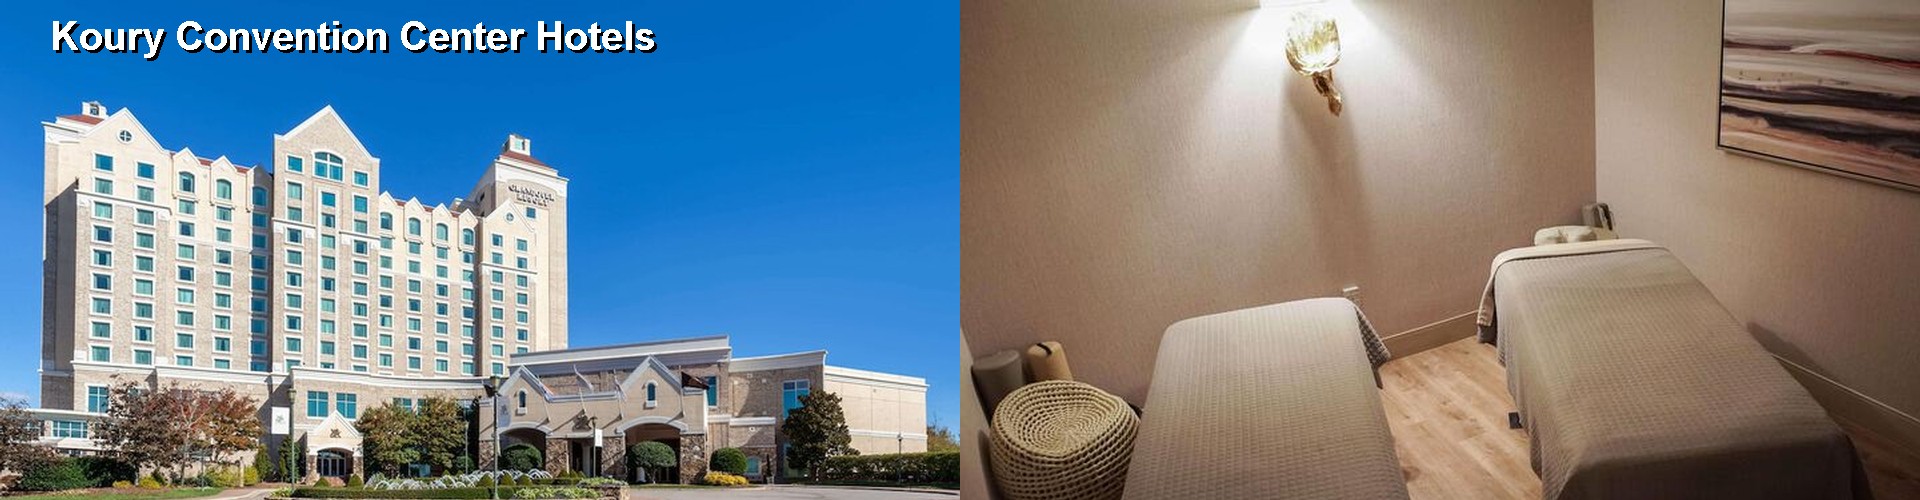 4 Best Hotels near Koury Convention Center